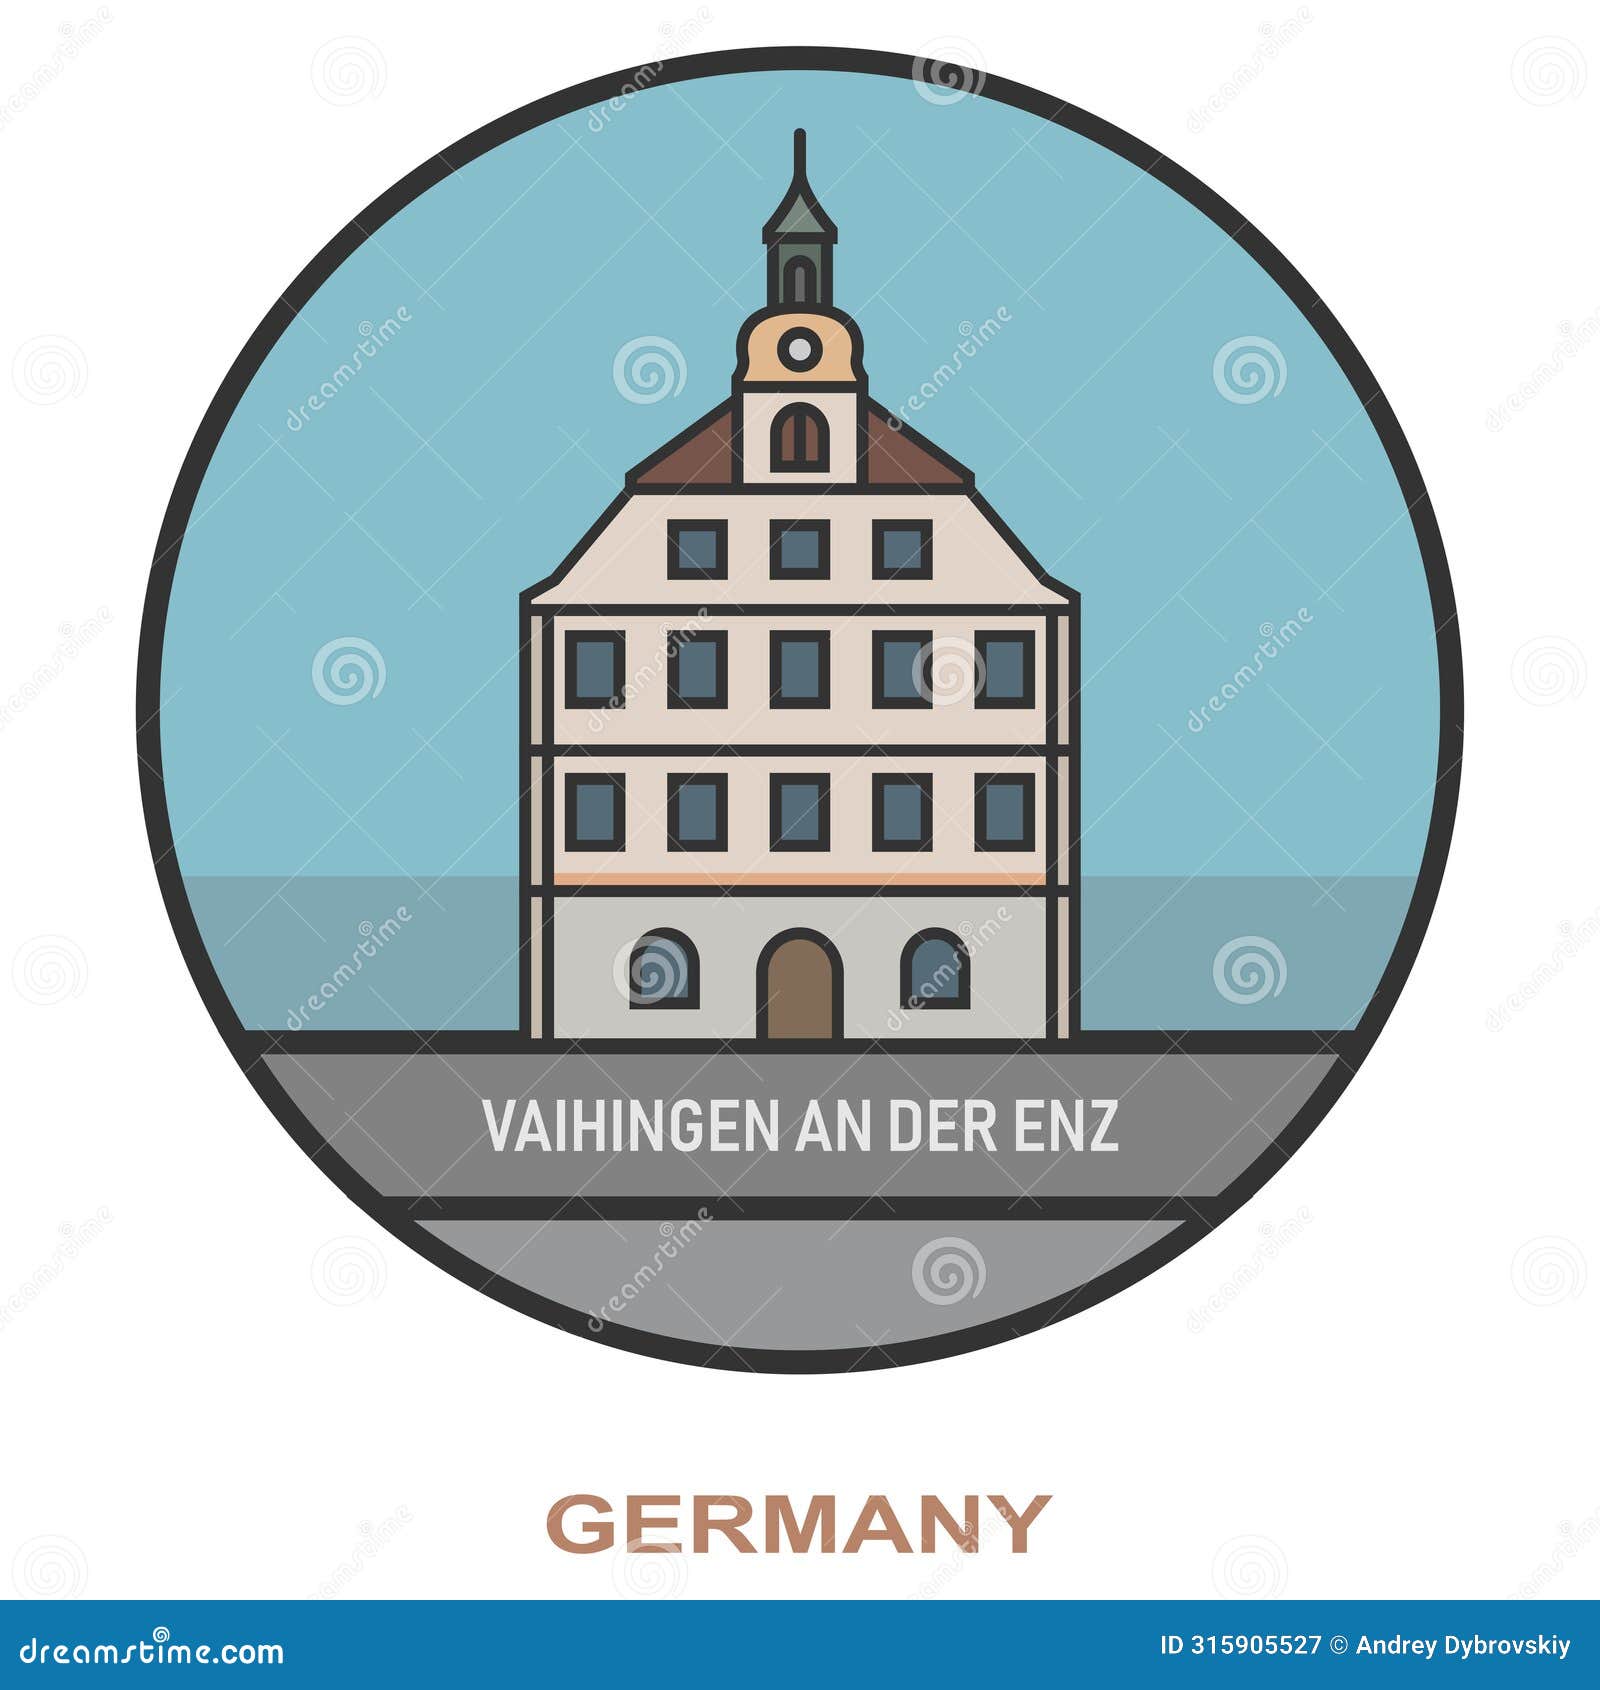 vaihingen an der enz. cities and towns in germany